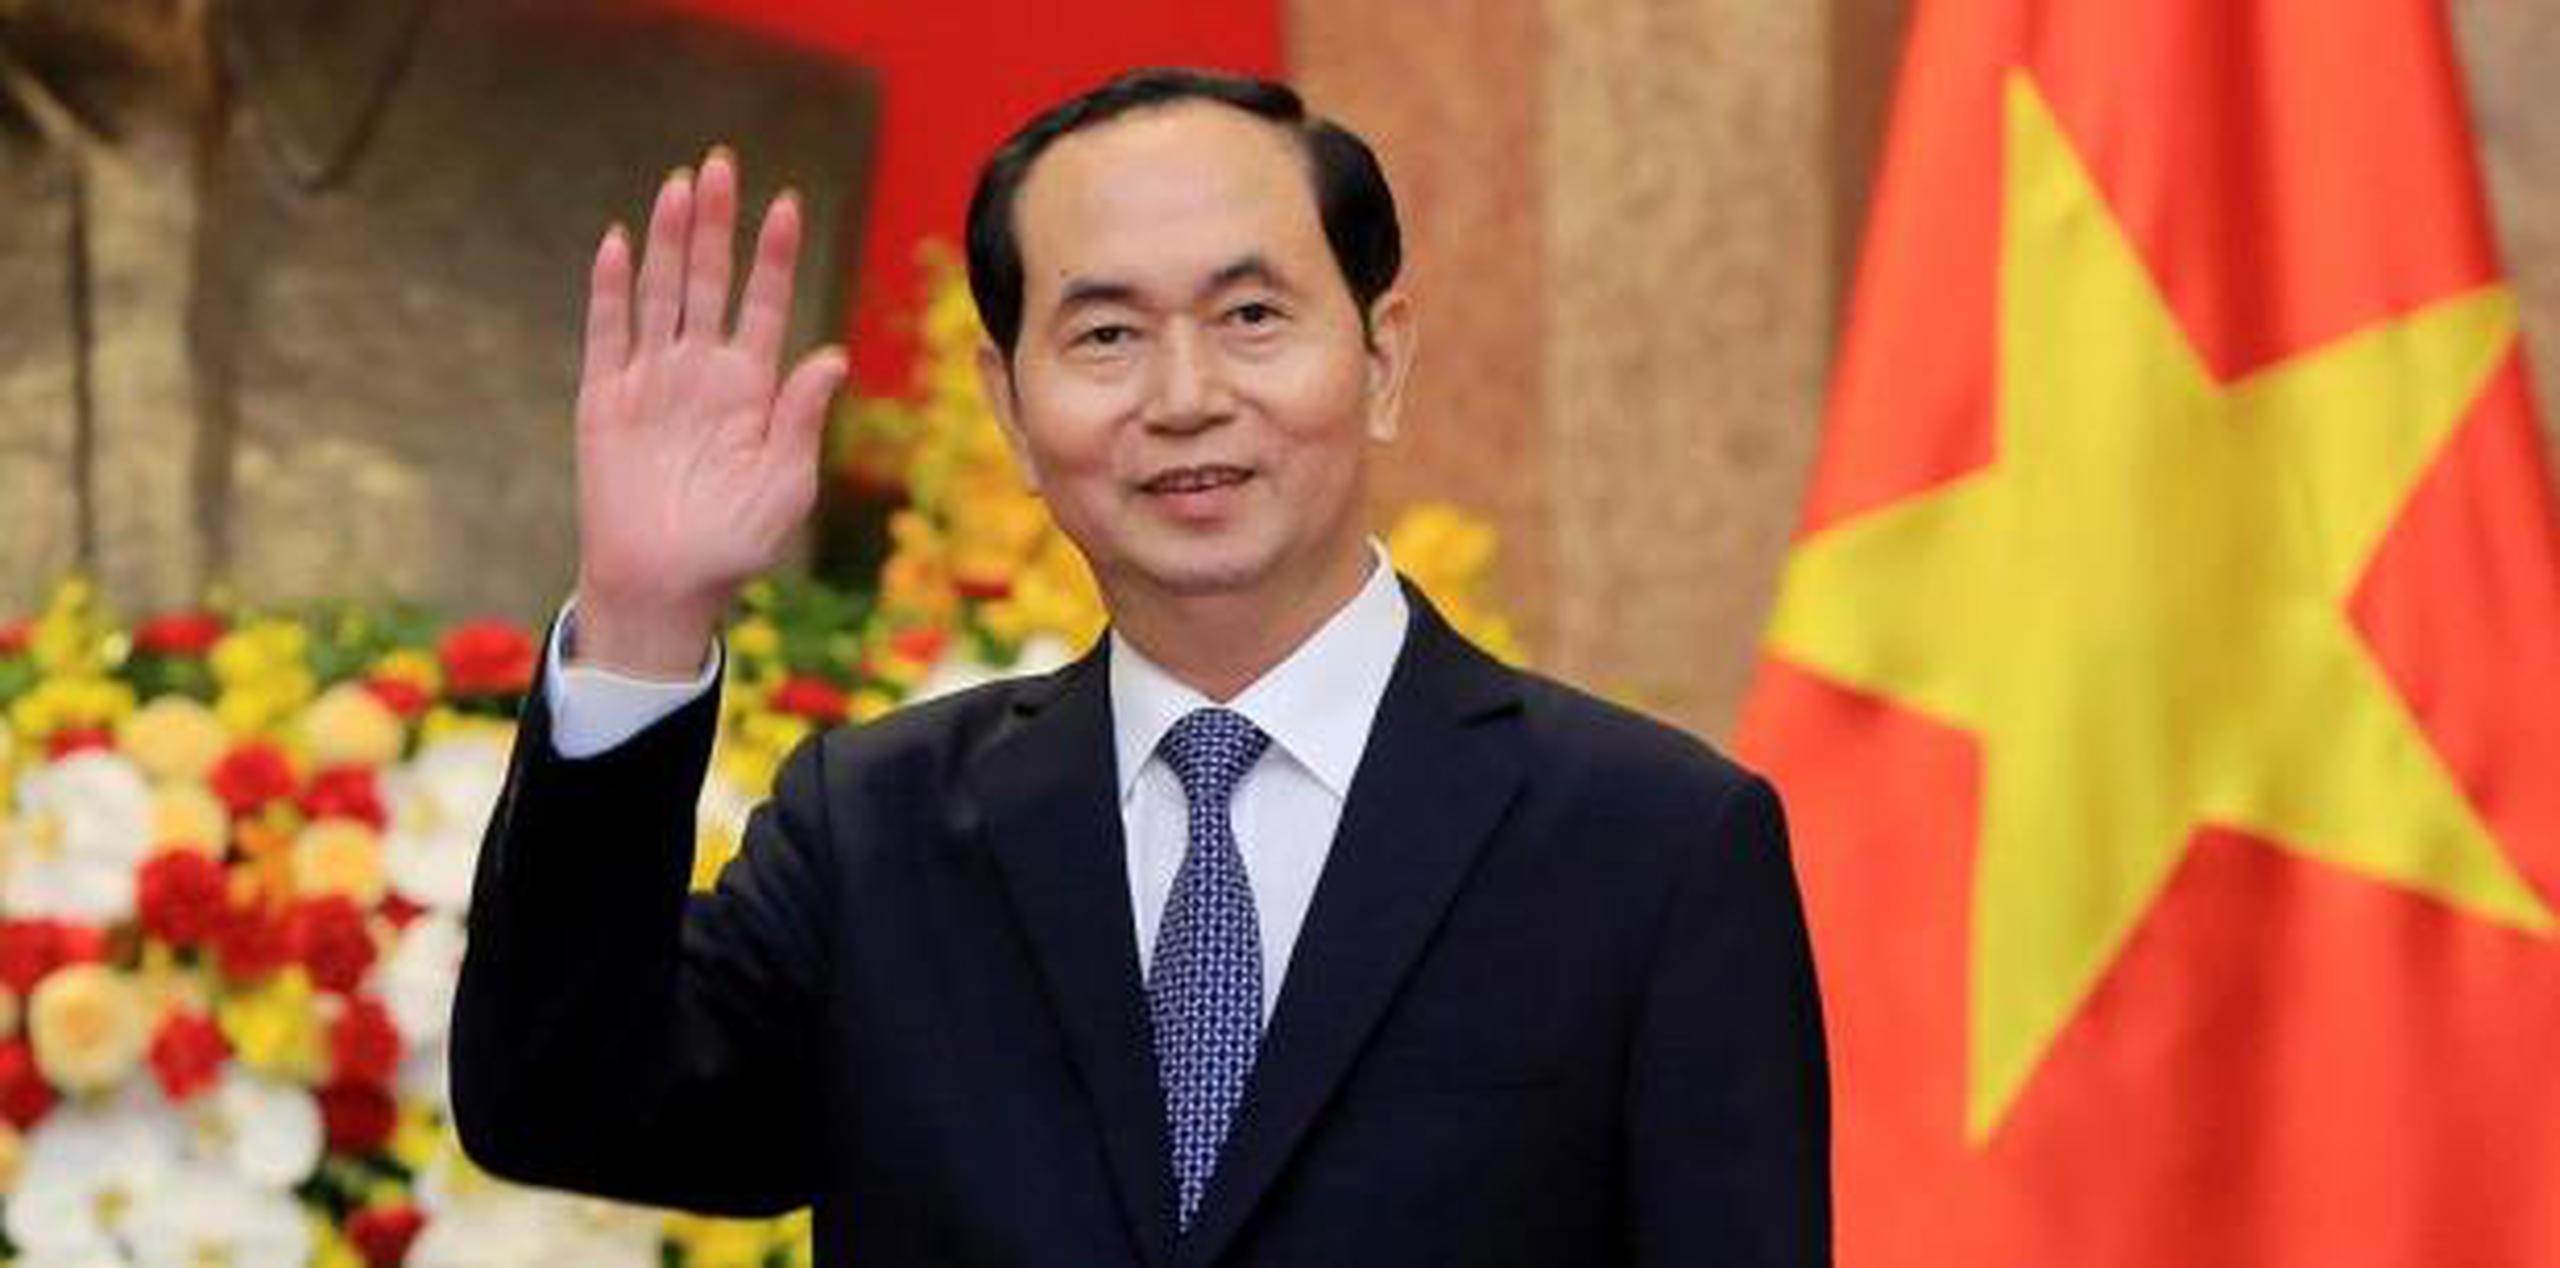 Tran Dai Quang fue el número dos del país después del líder del Partido Comunista en el poder. (AP)